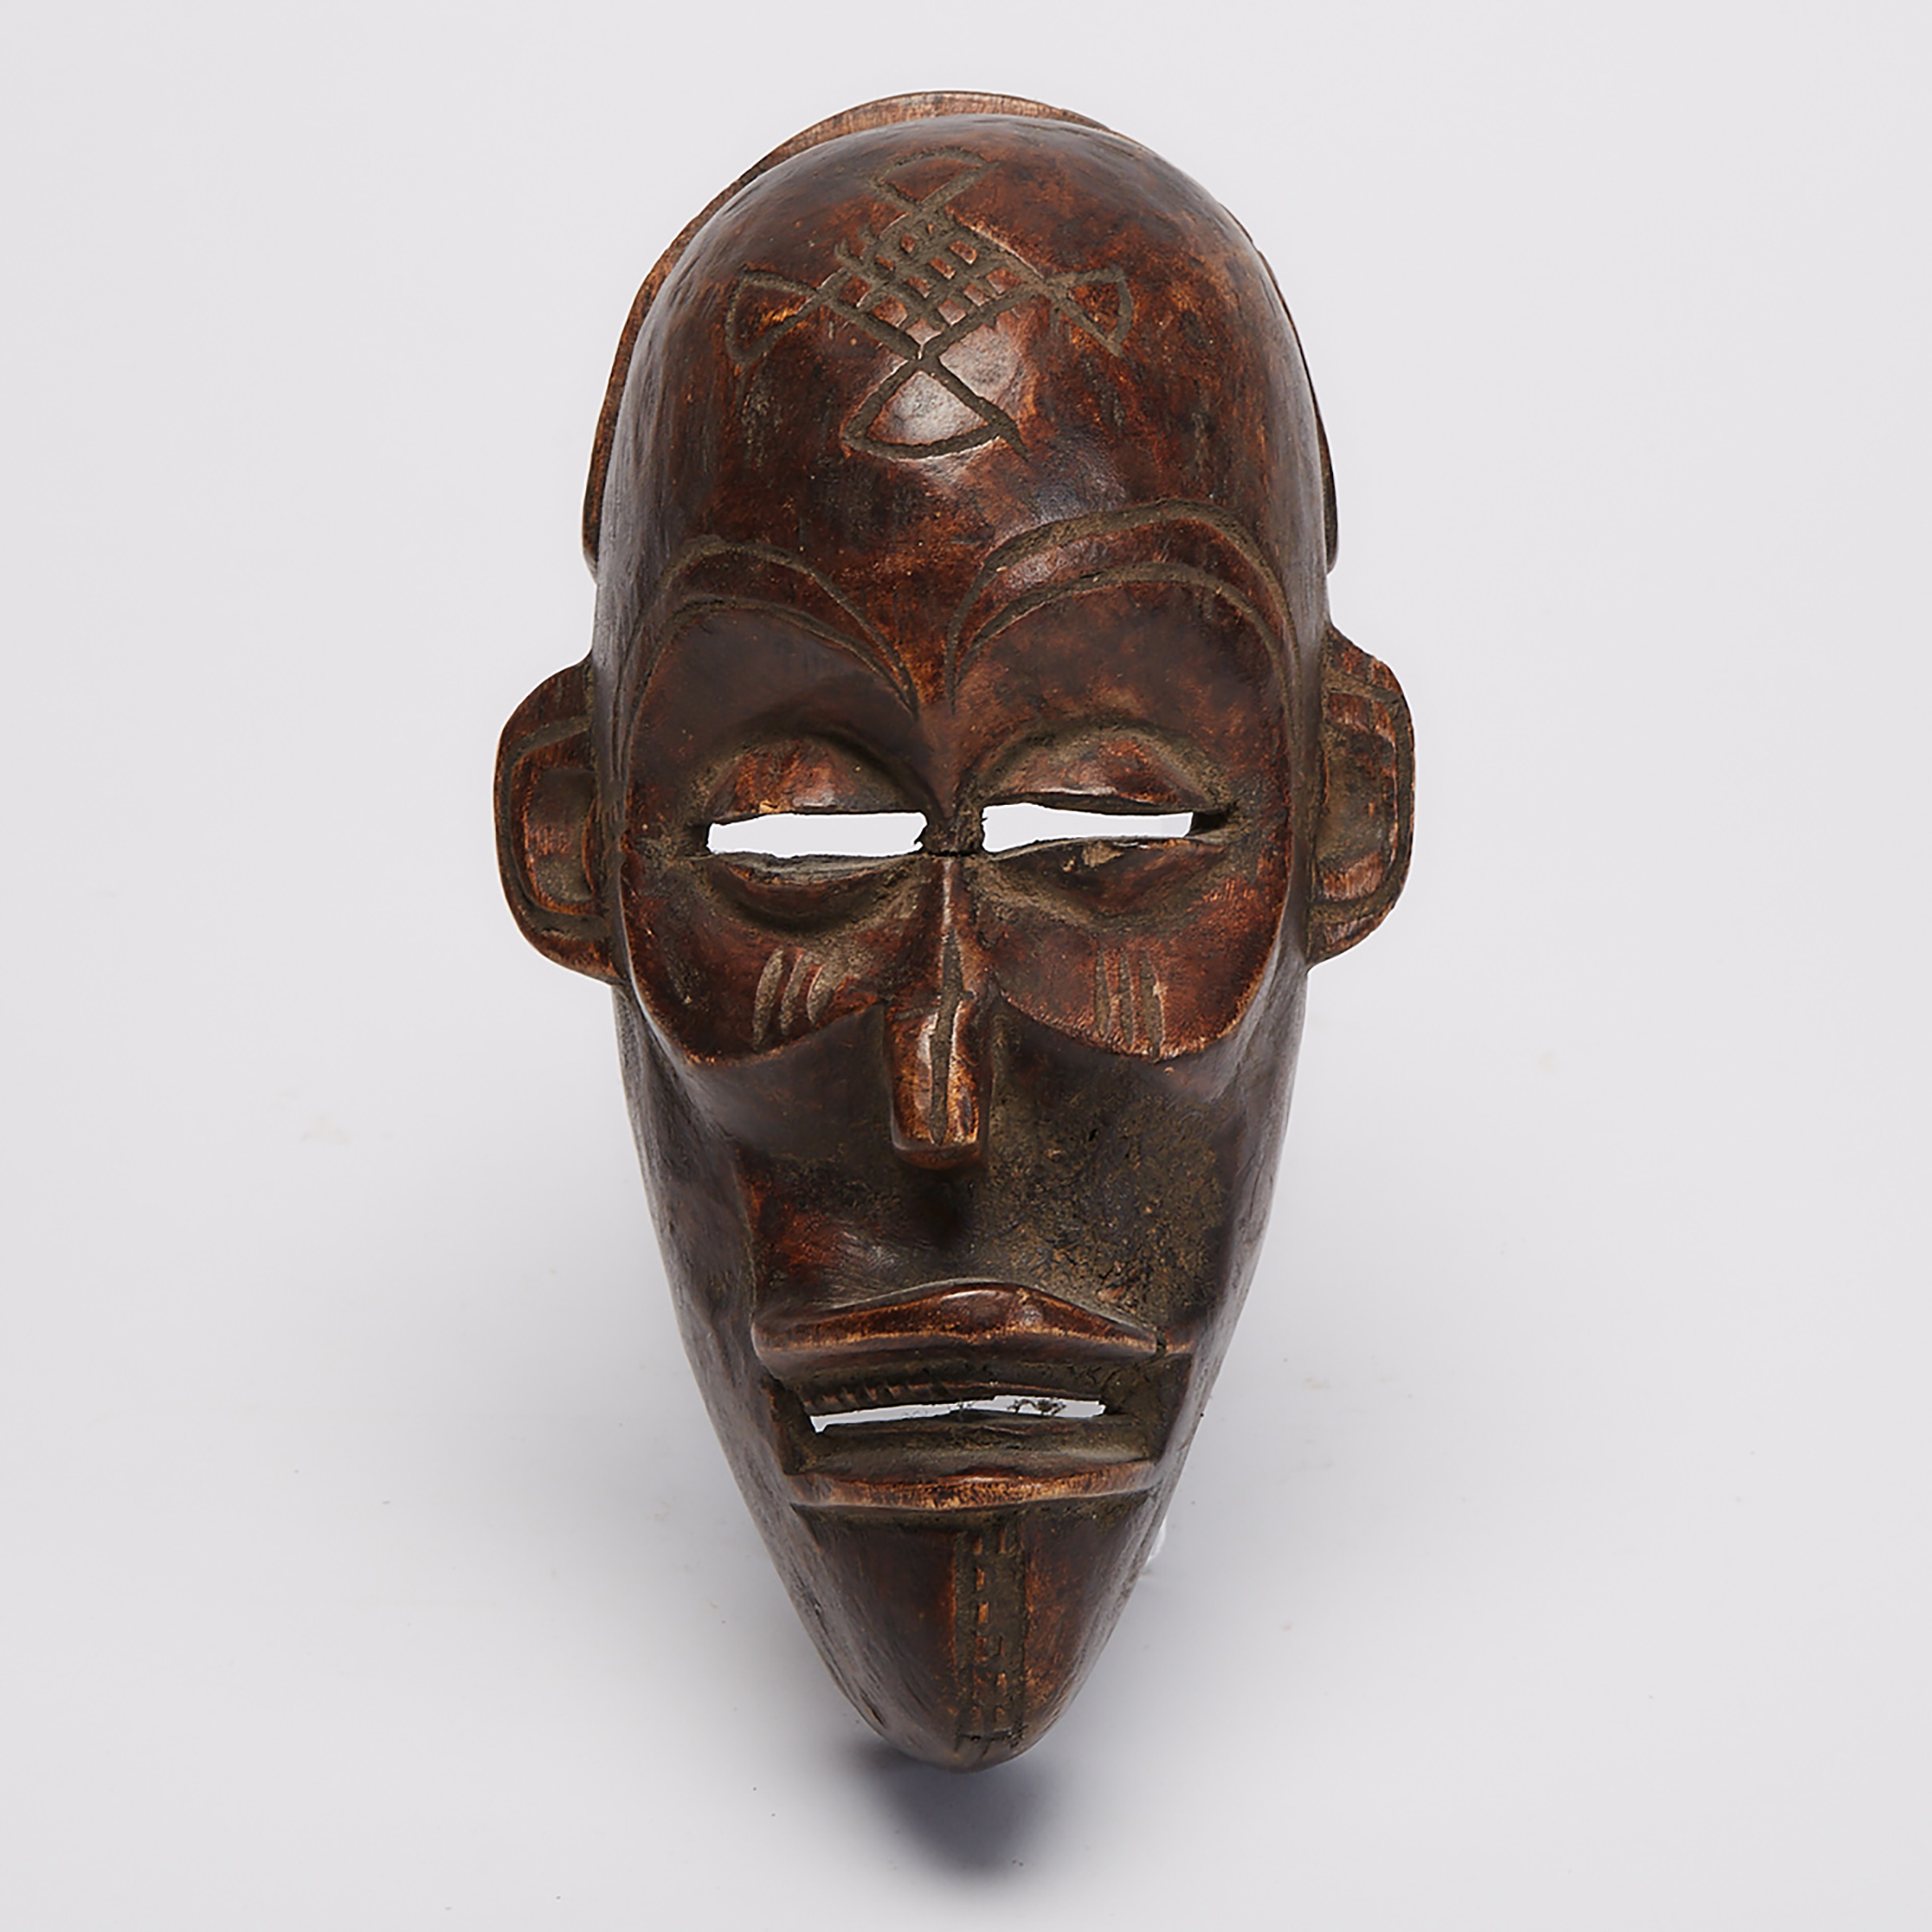 Chokwe Mask, Central Africa